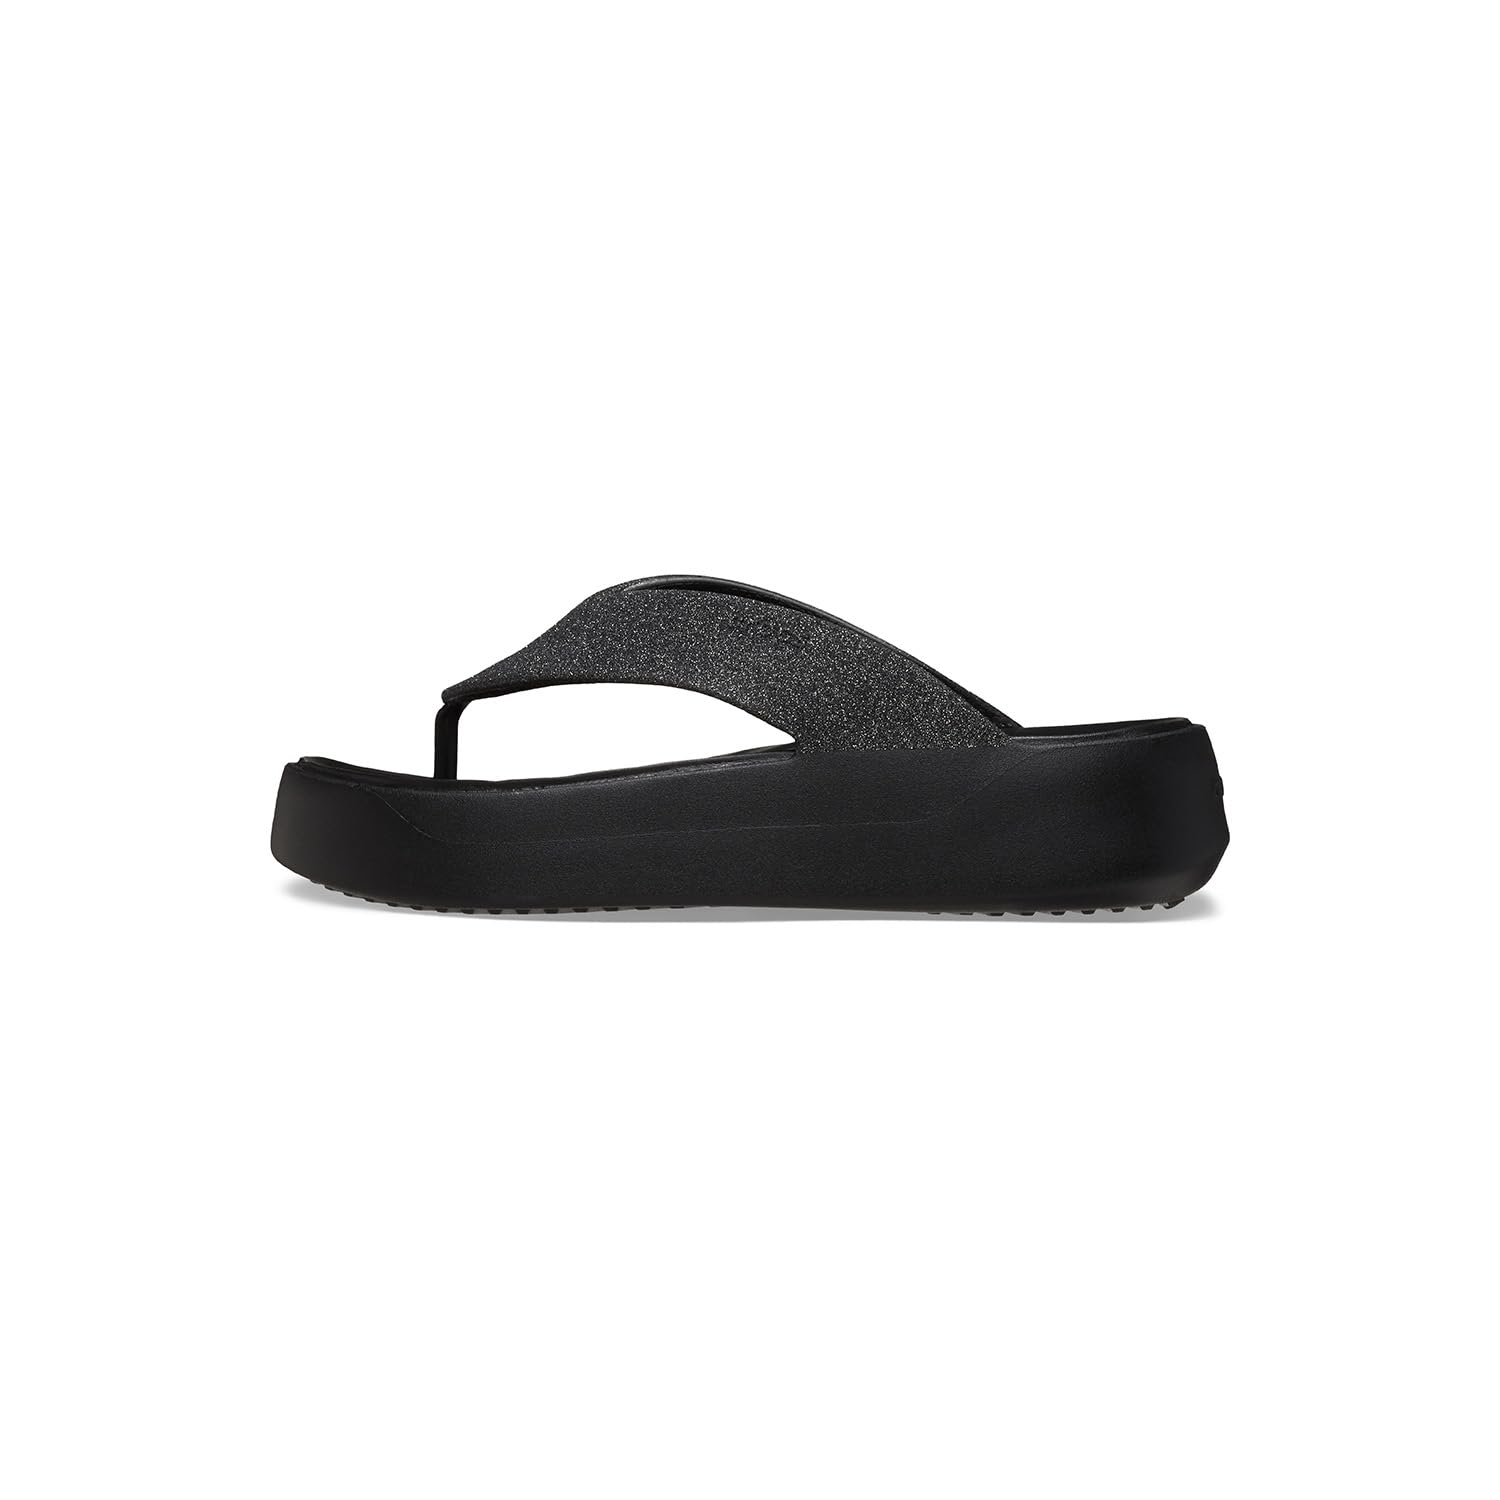 Crocs Women Getaway Platform Flip Flops, Wedge Sandals for Women, Black Glitter, 6 Women